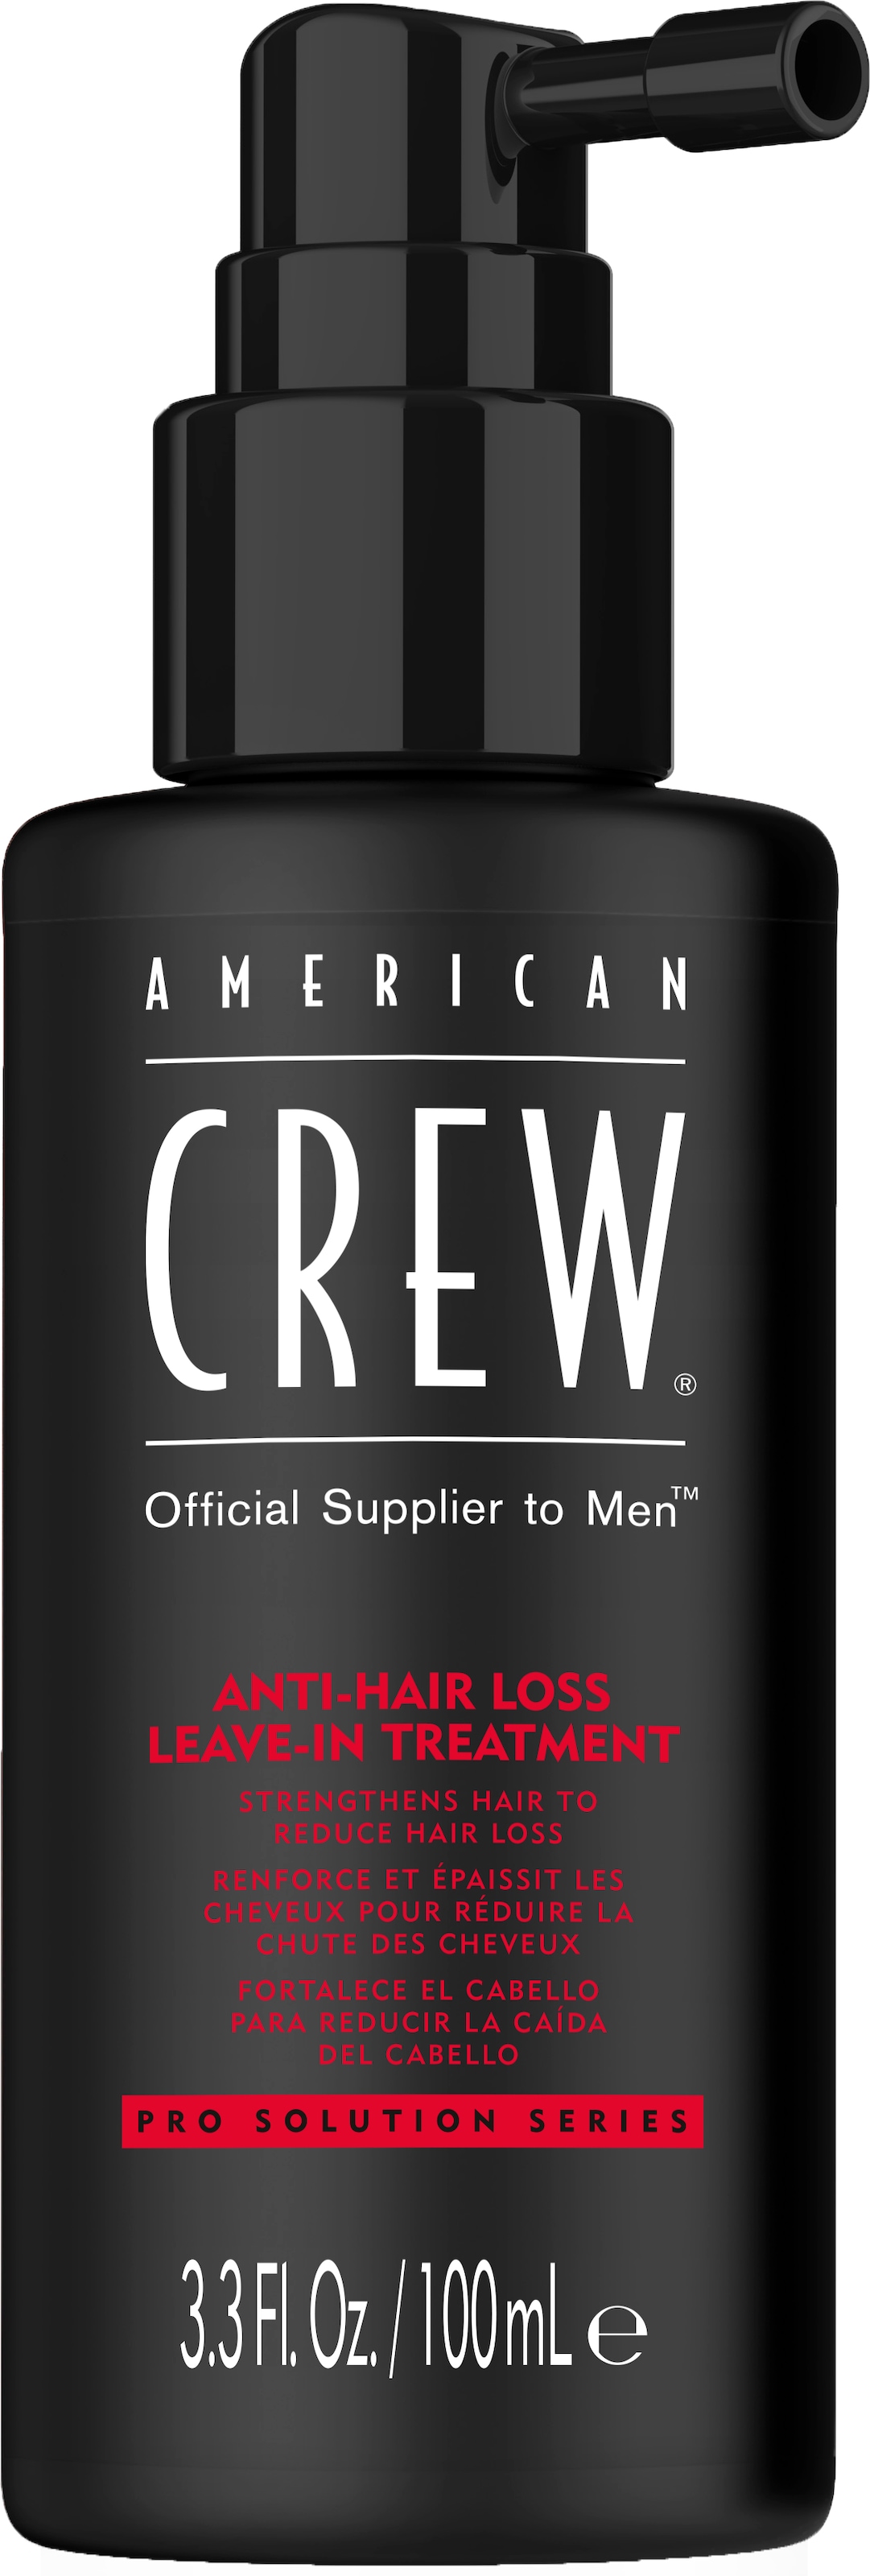 American Crew Leave-in Pflege »Anti-Hair Loss Treatment«